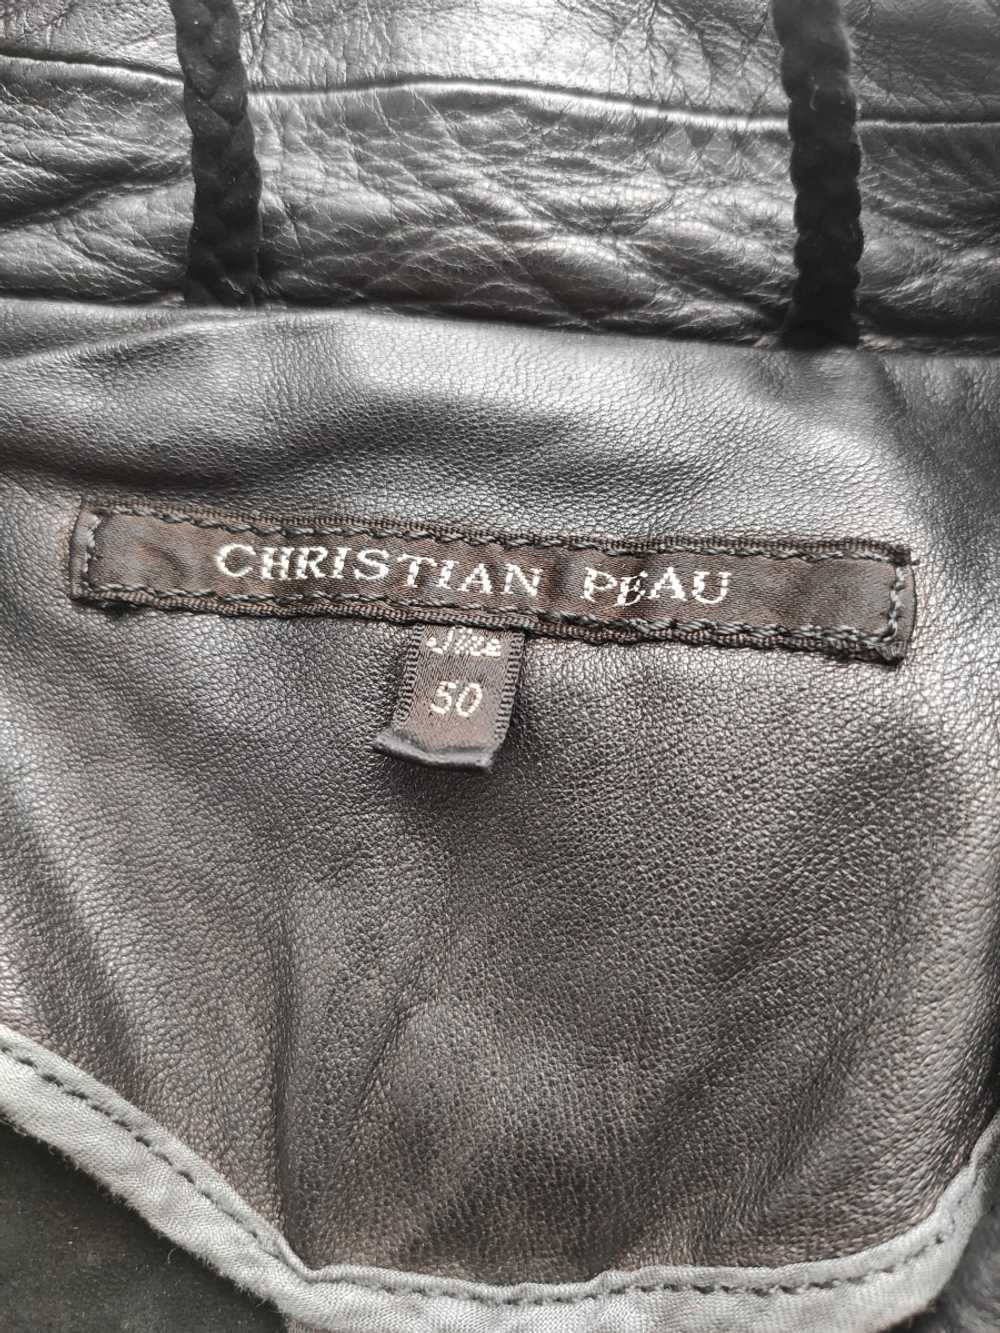 Christian Peau - Leather overshirt.Like Paul Harn… - image 8